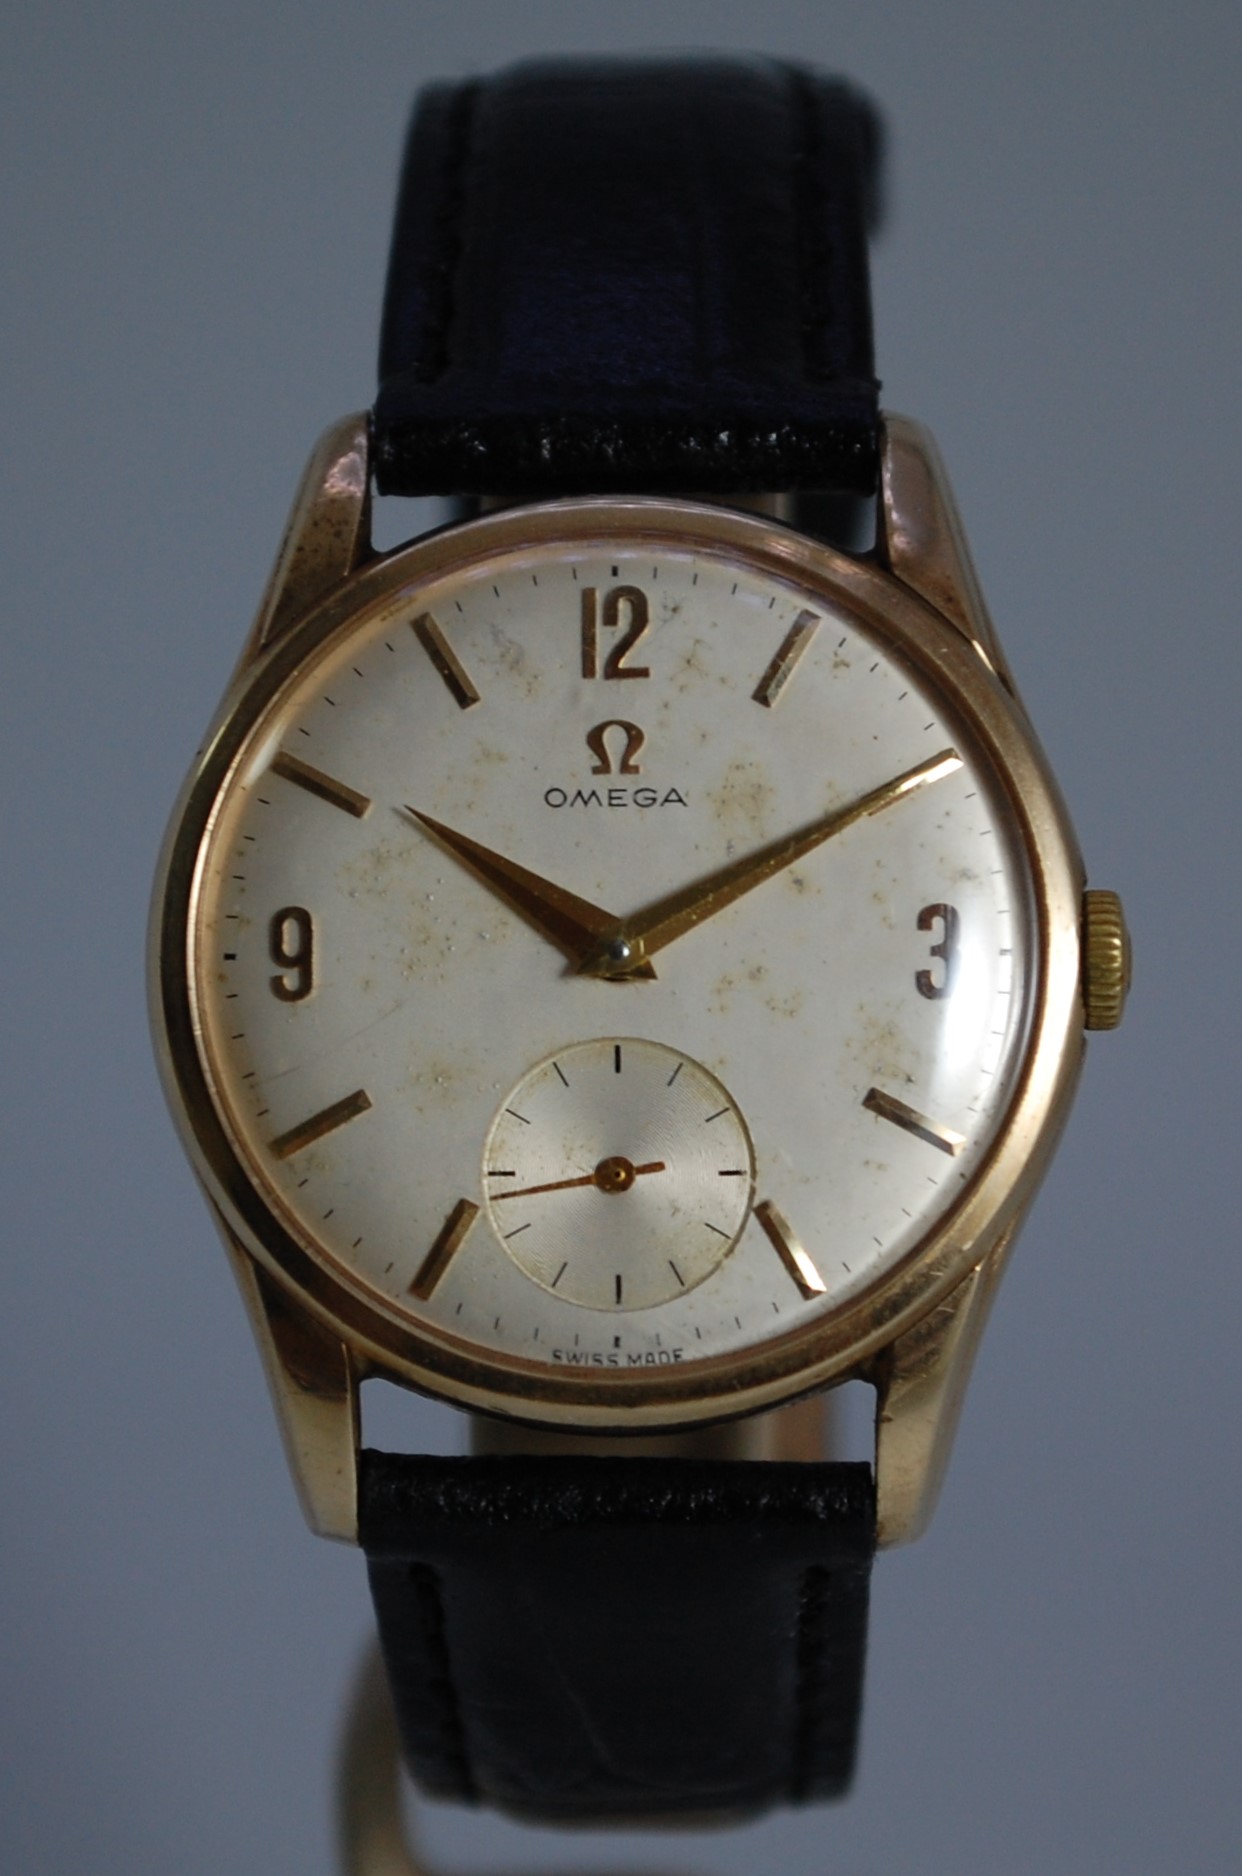 9k gold watch calibre 269 